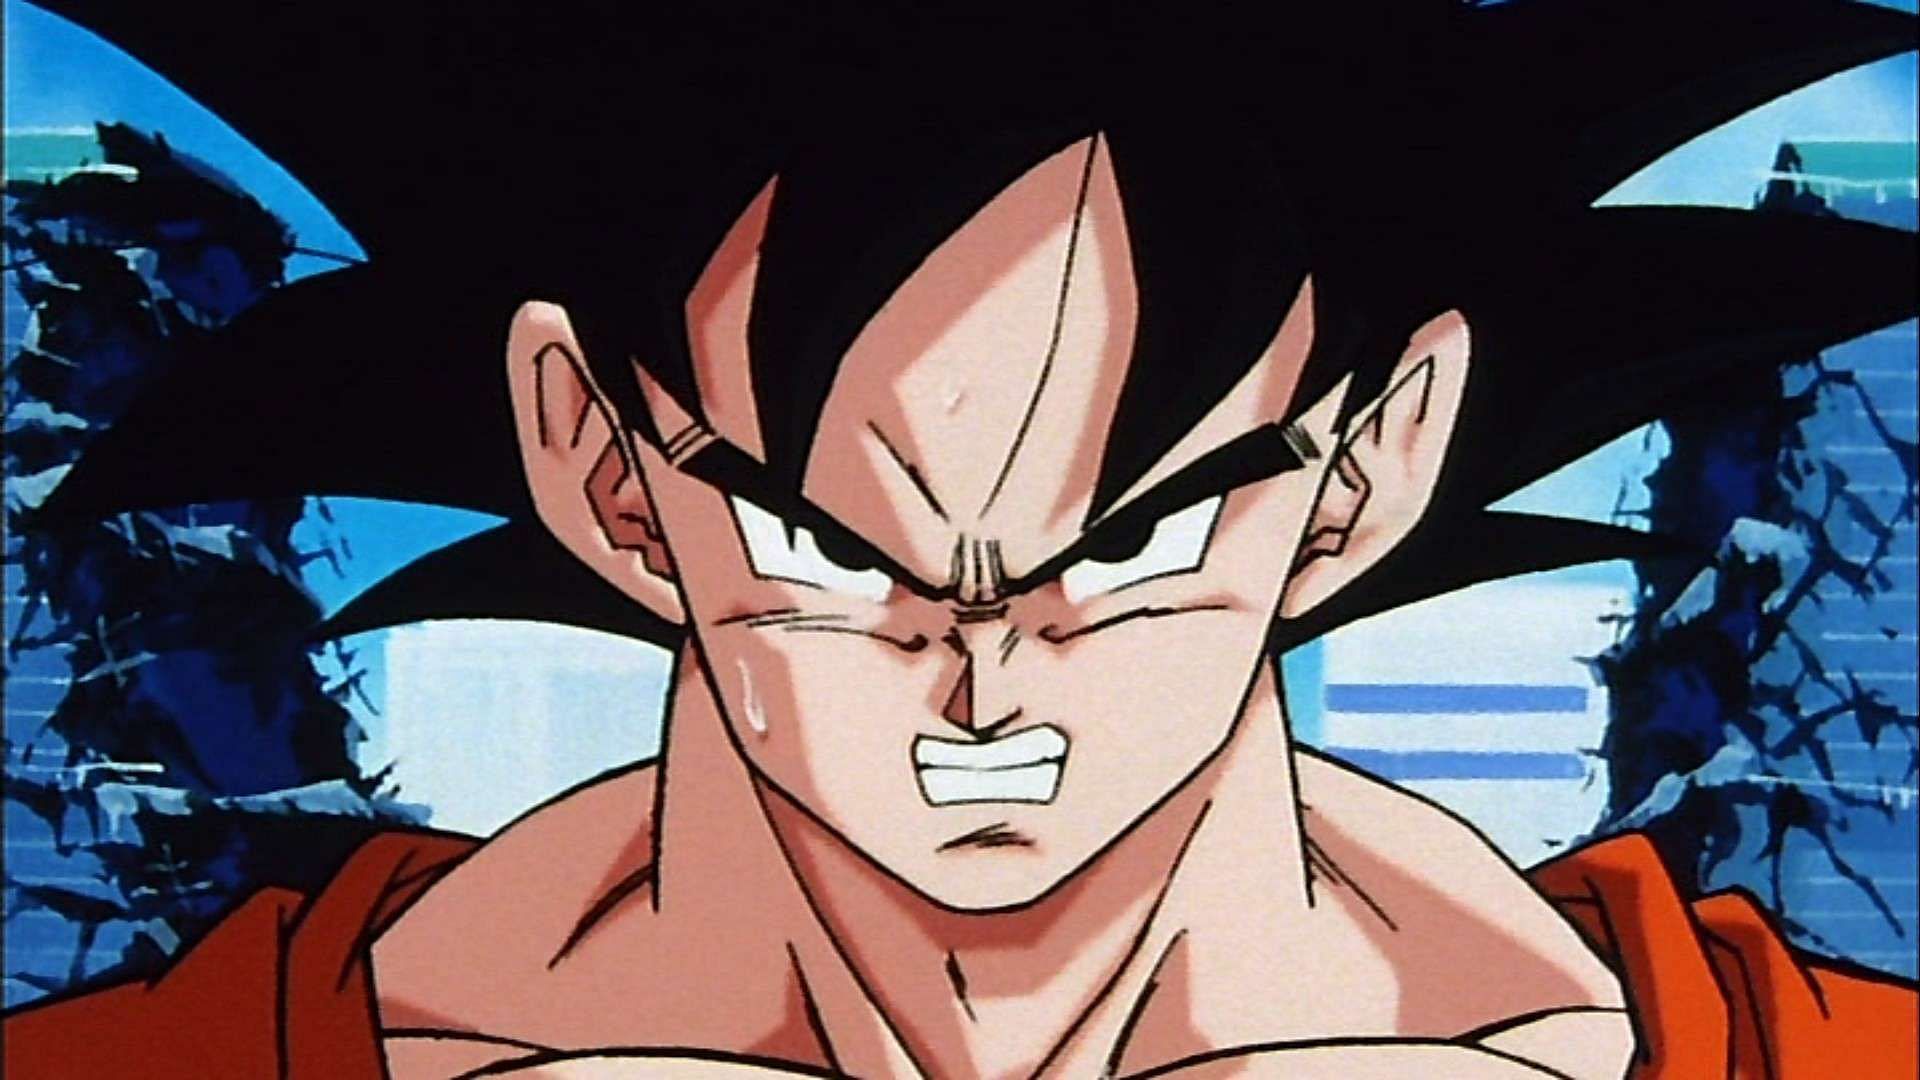 Goku (image via Toei Animation)